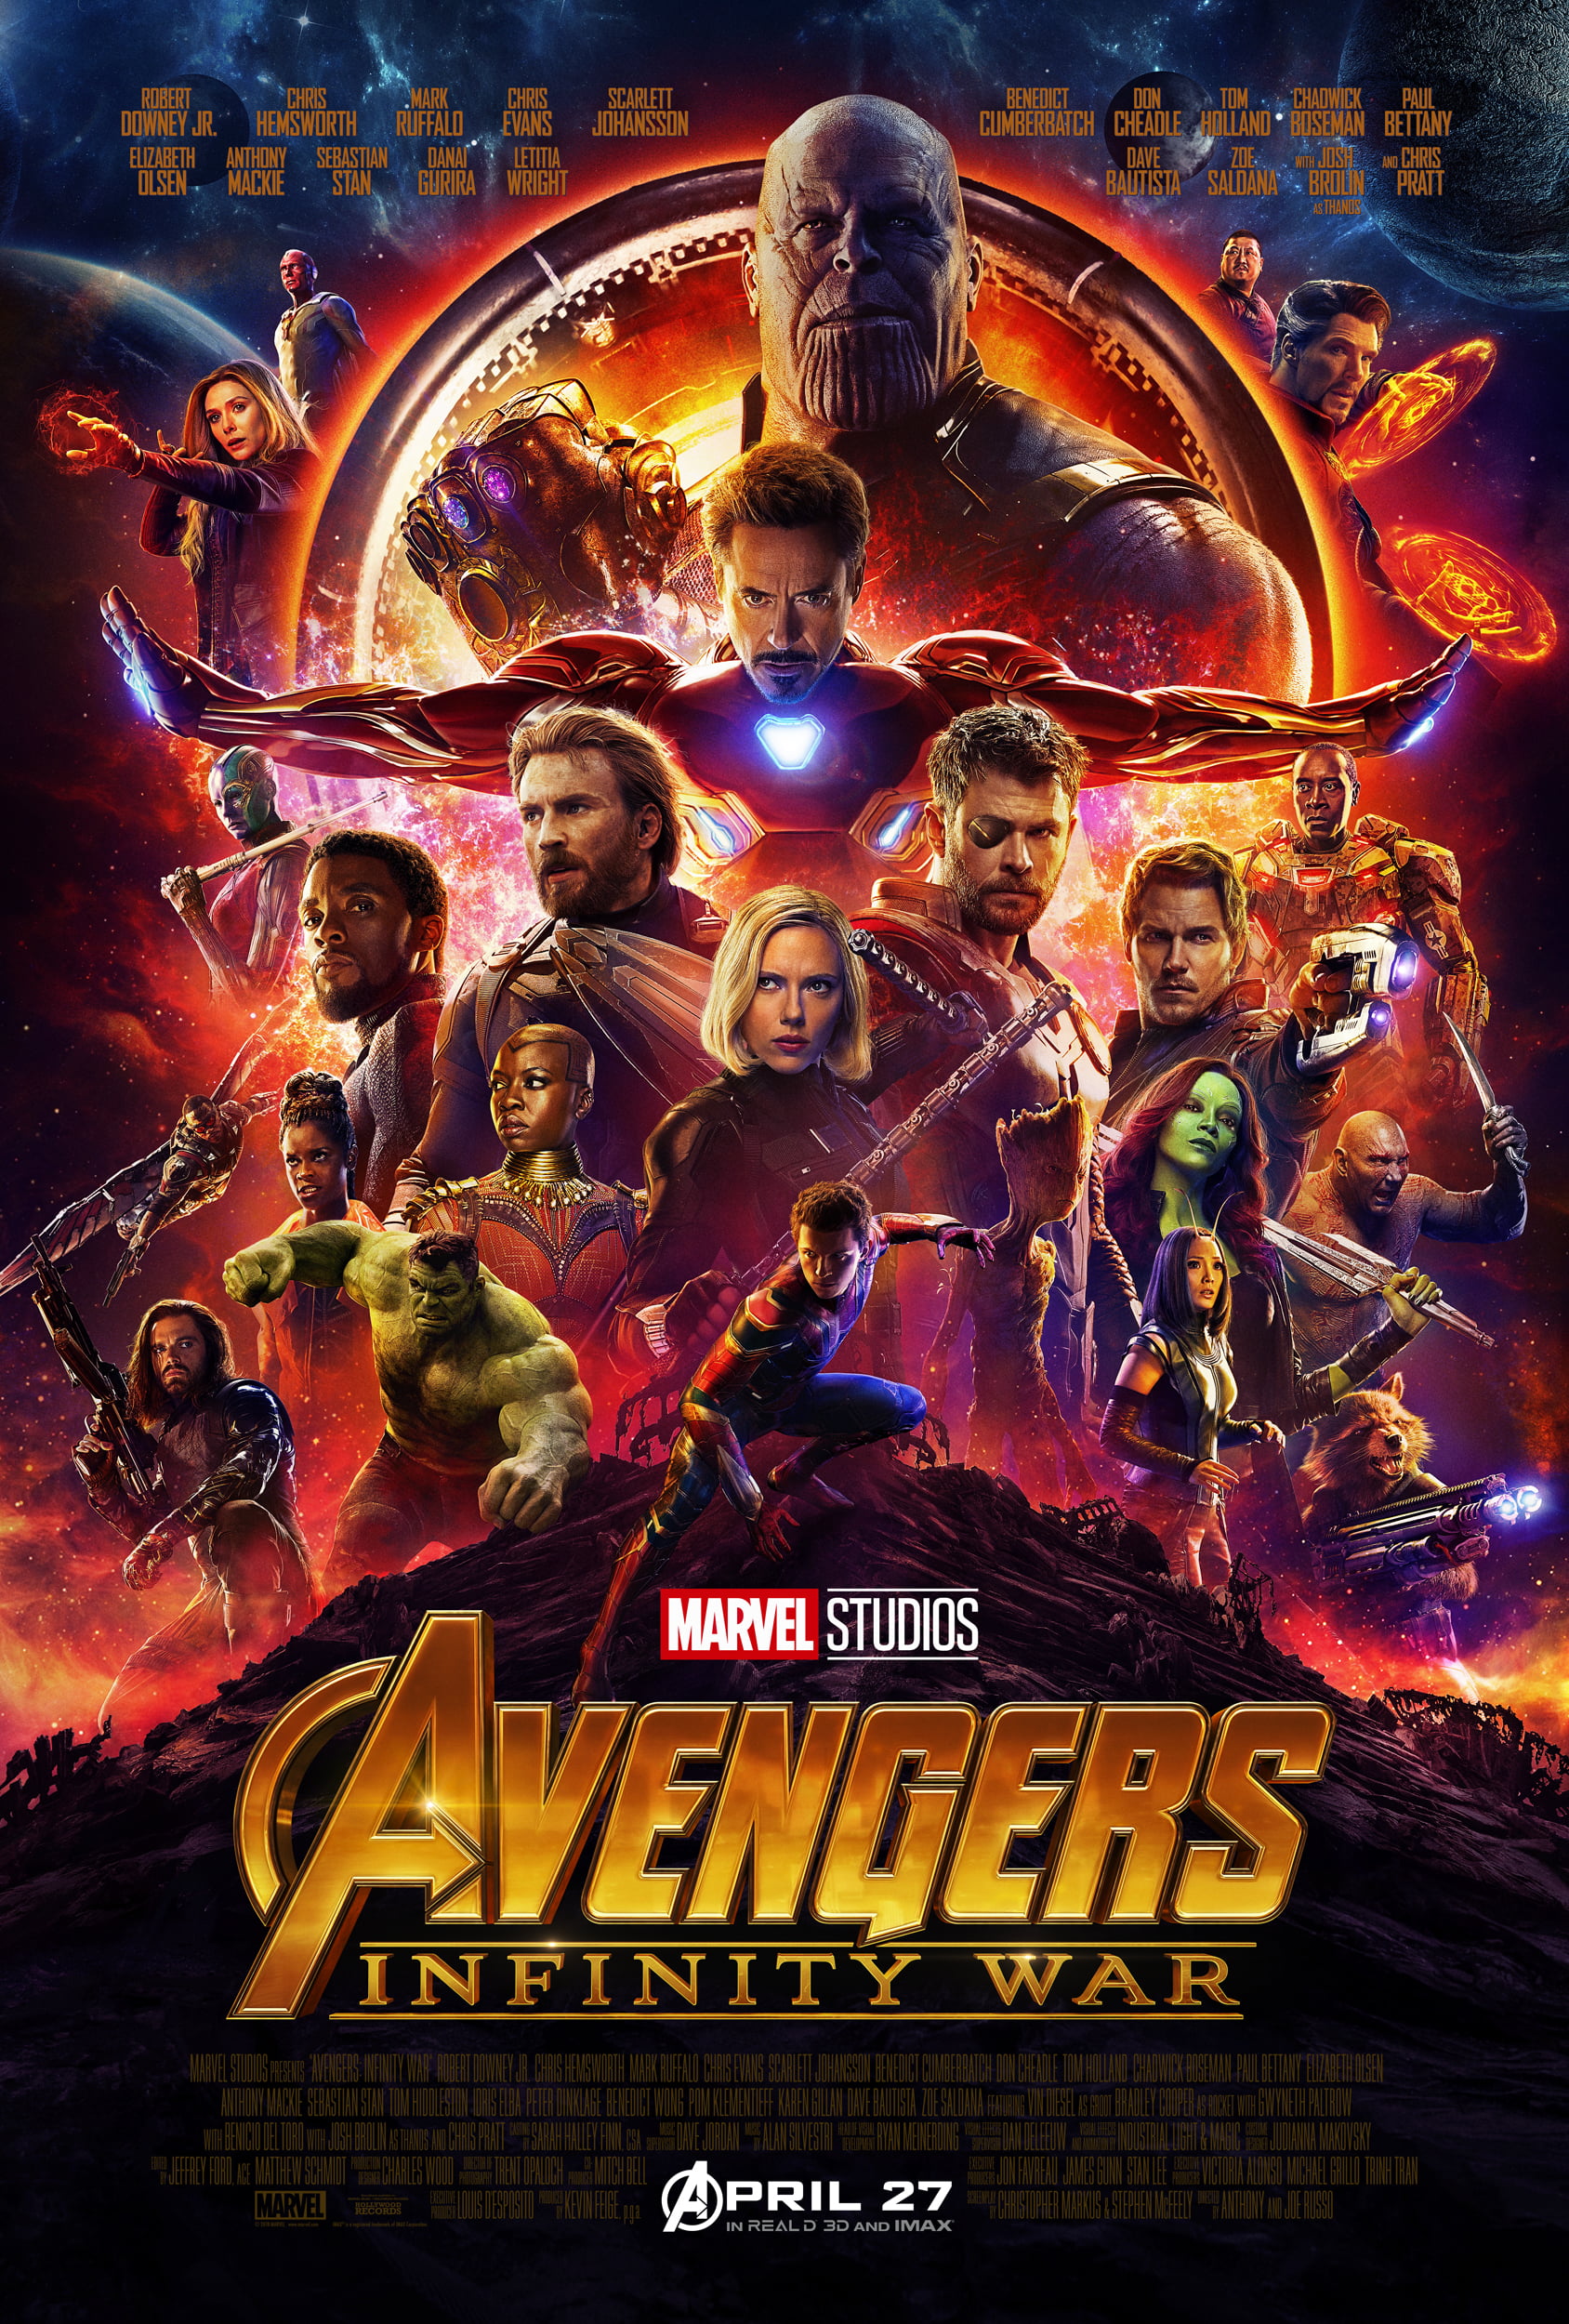 Marvel Avengers Infinity War screenshot, Marvel Cinematic Universe